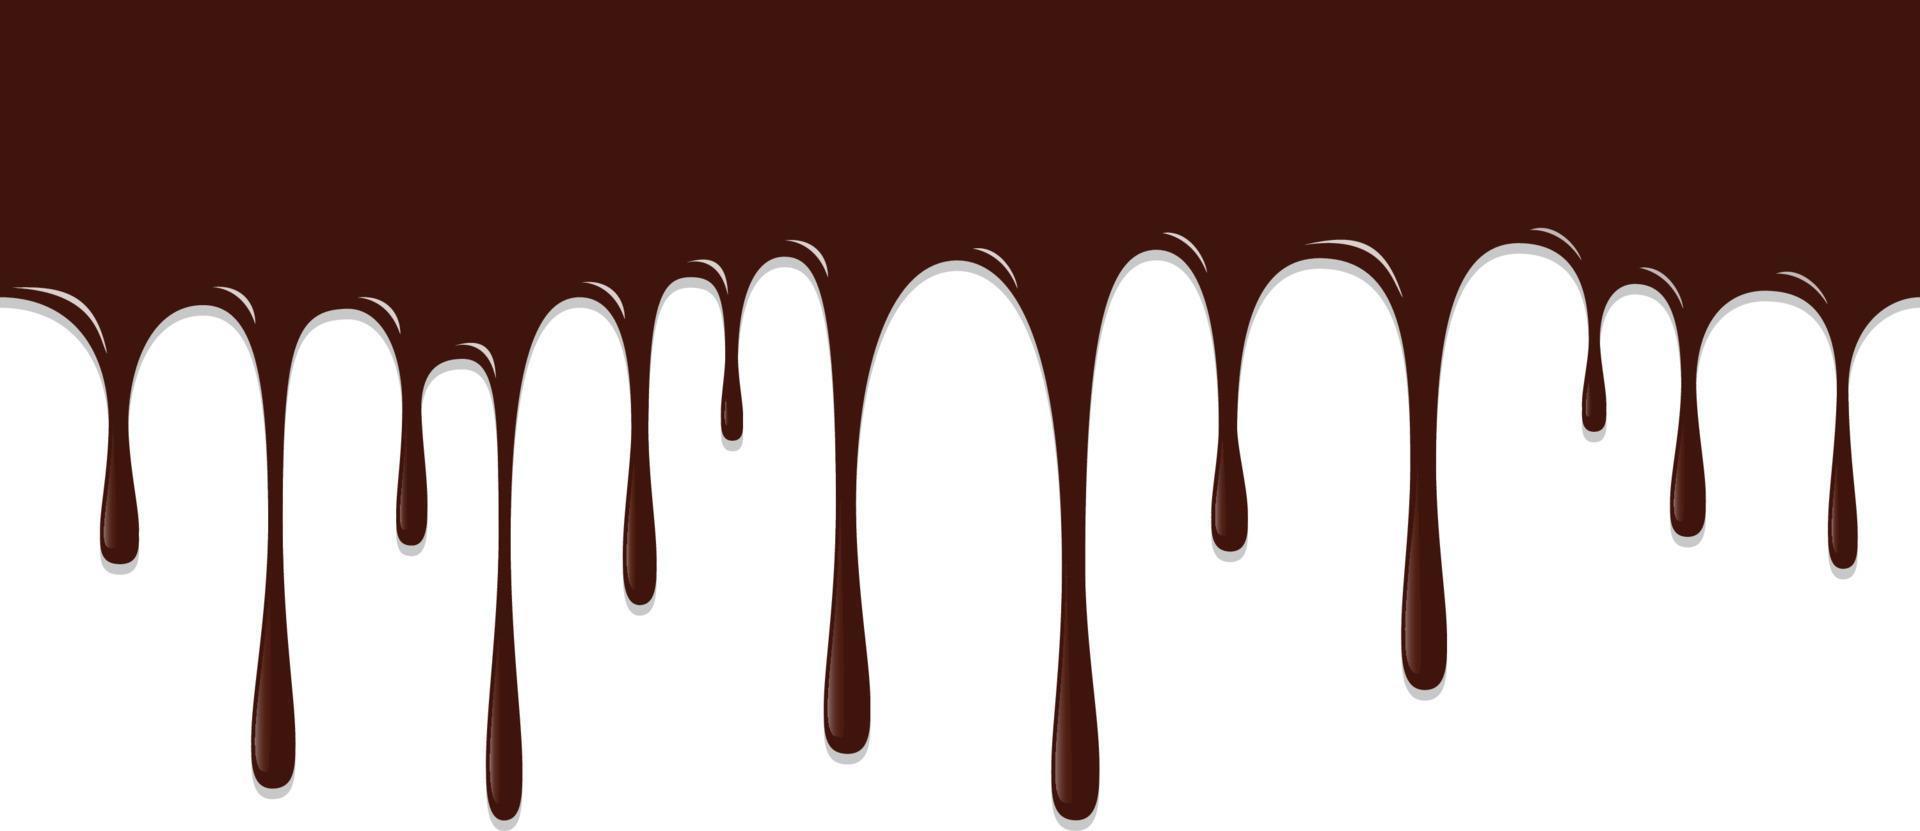 chocolade druipen, chocolade achtergrond vectorillustratie vector